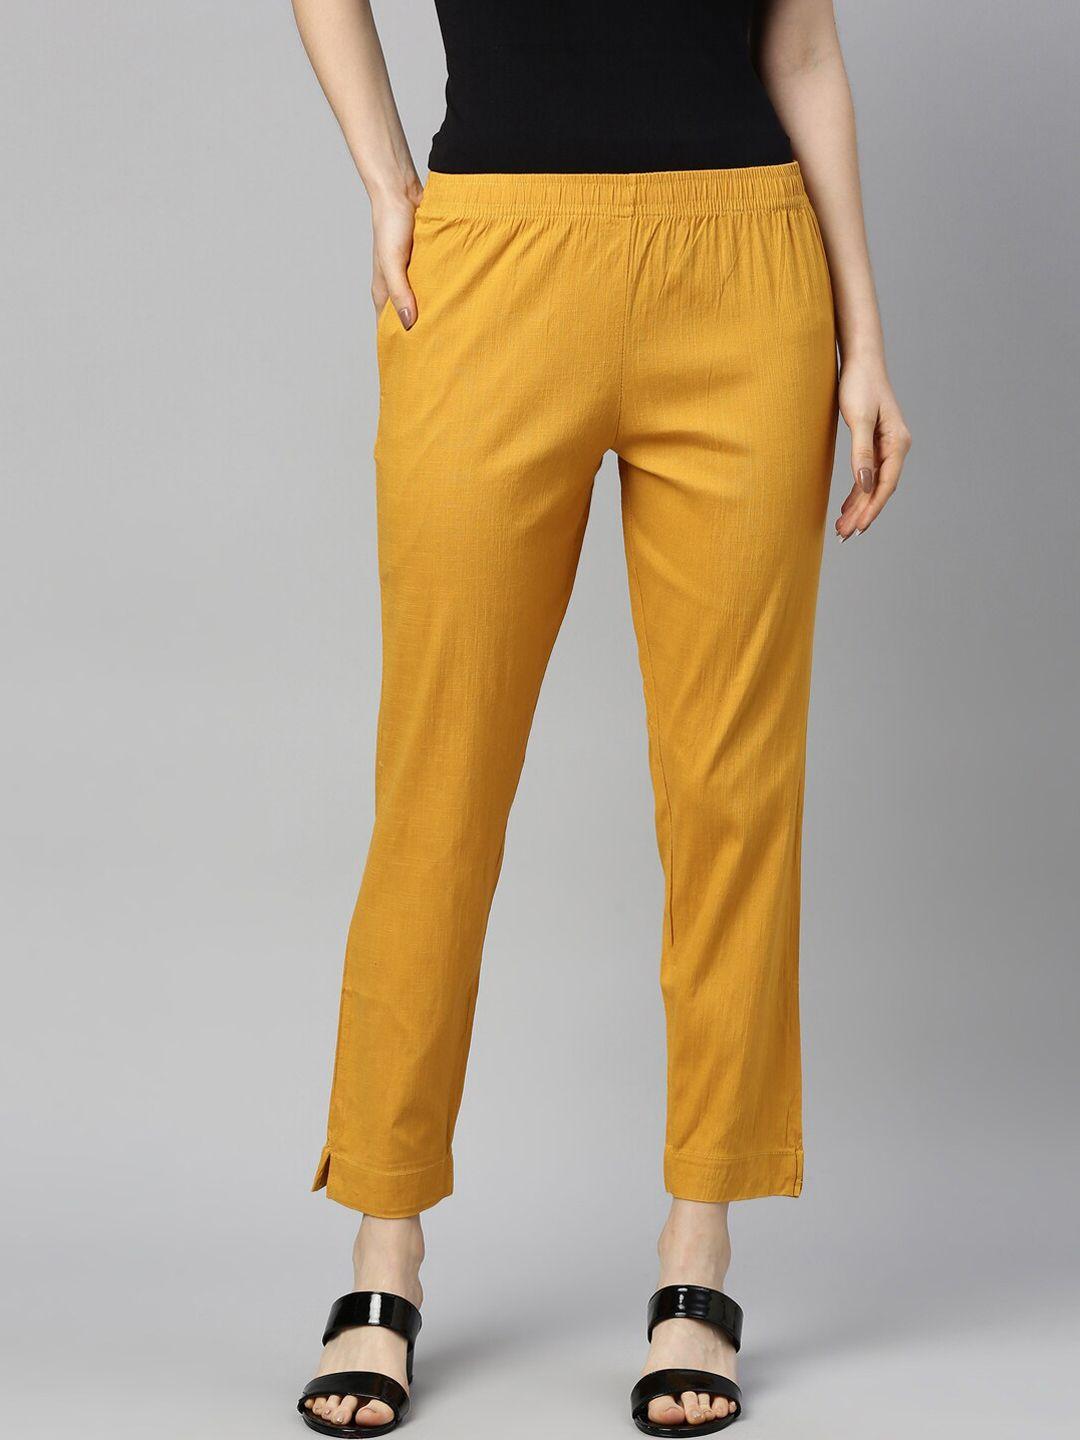 goldstroms-women-mustard-yellow-cotton-trousers